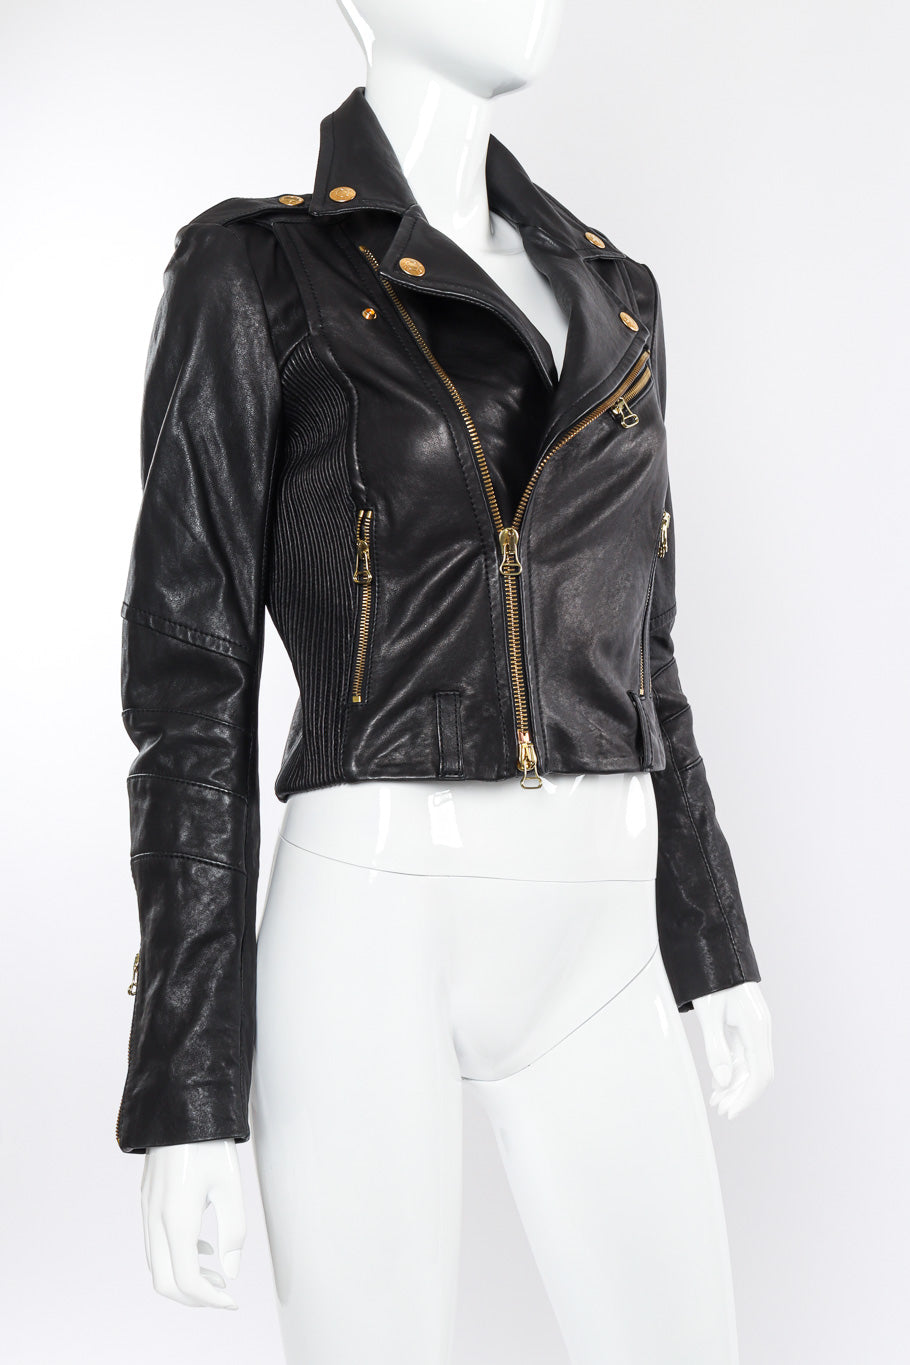 Pierre Balmain Ribbed Leather Moto Jacket 3/4 view on mannequin @Recessla